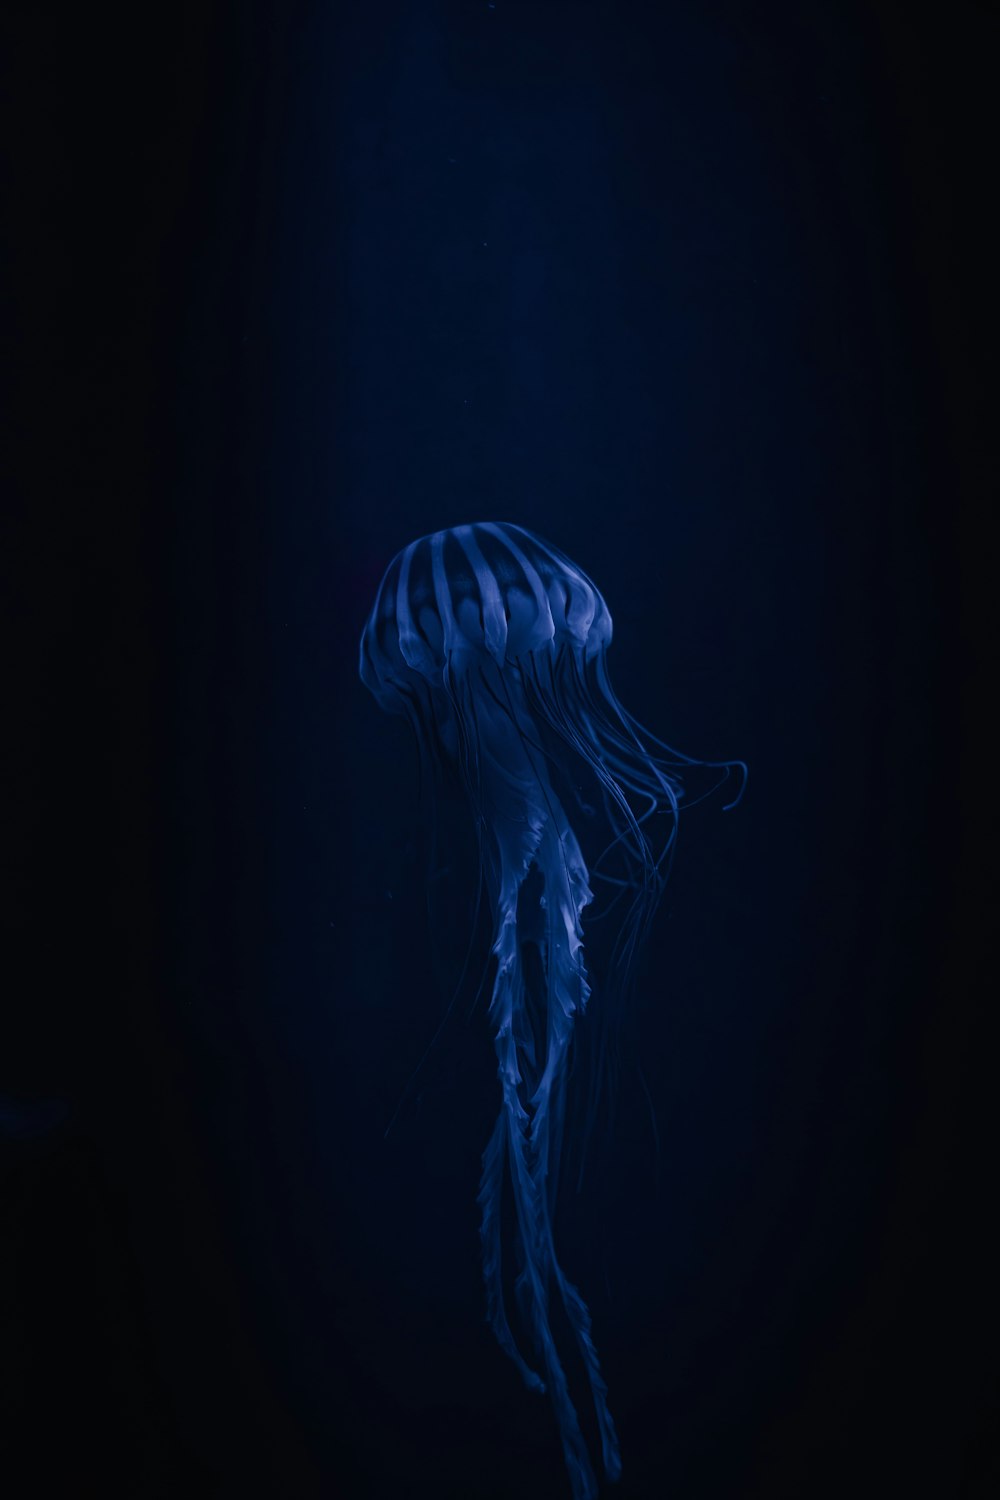 una medusa azul flotando en el agua oscura